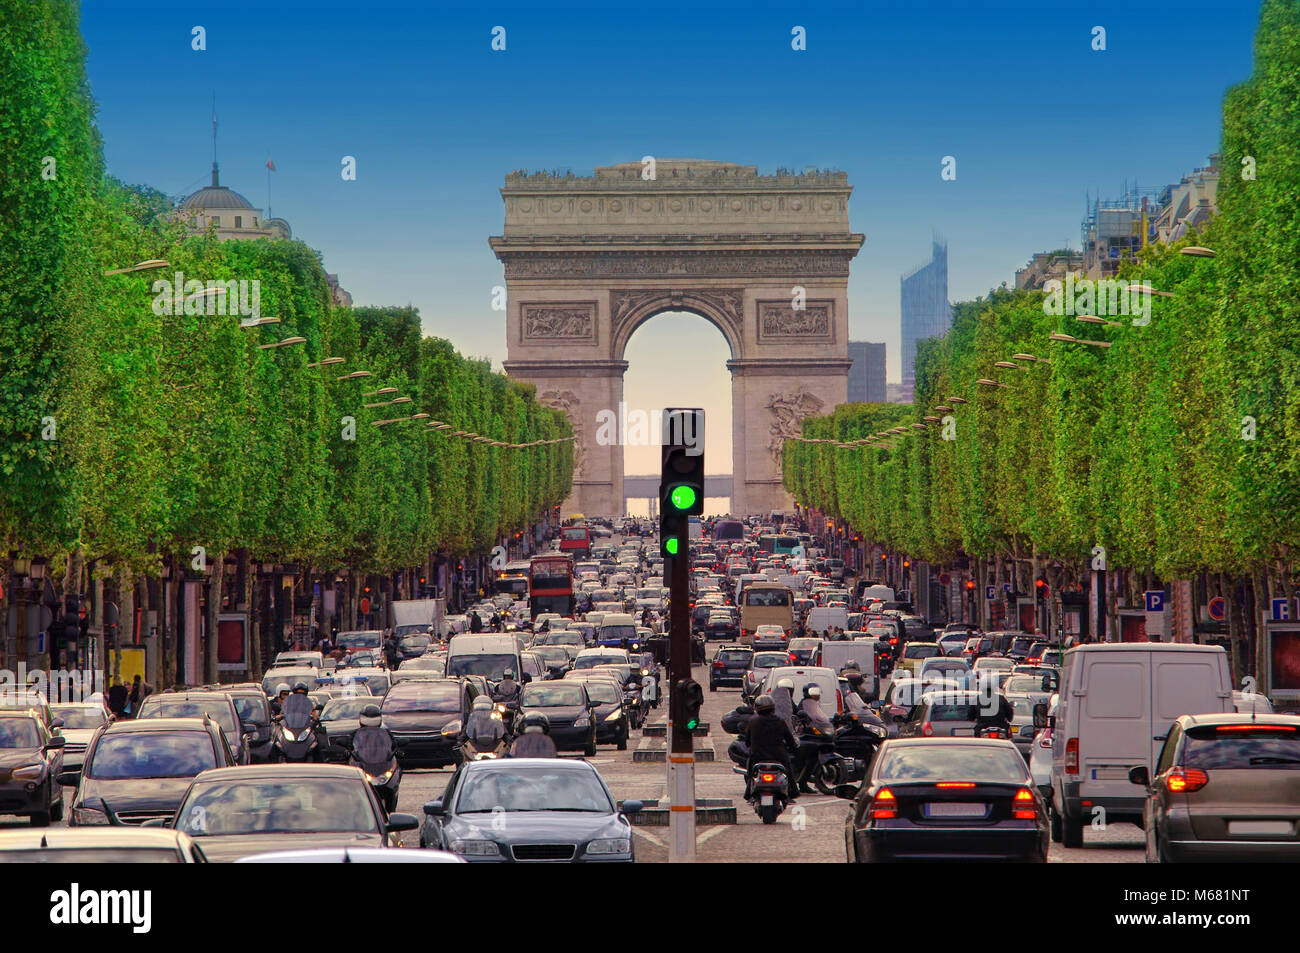 traffic jam with cars in Paris city, France. view of Arc de Triomphe and Champs-Élysées boulevard Stock Photo